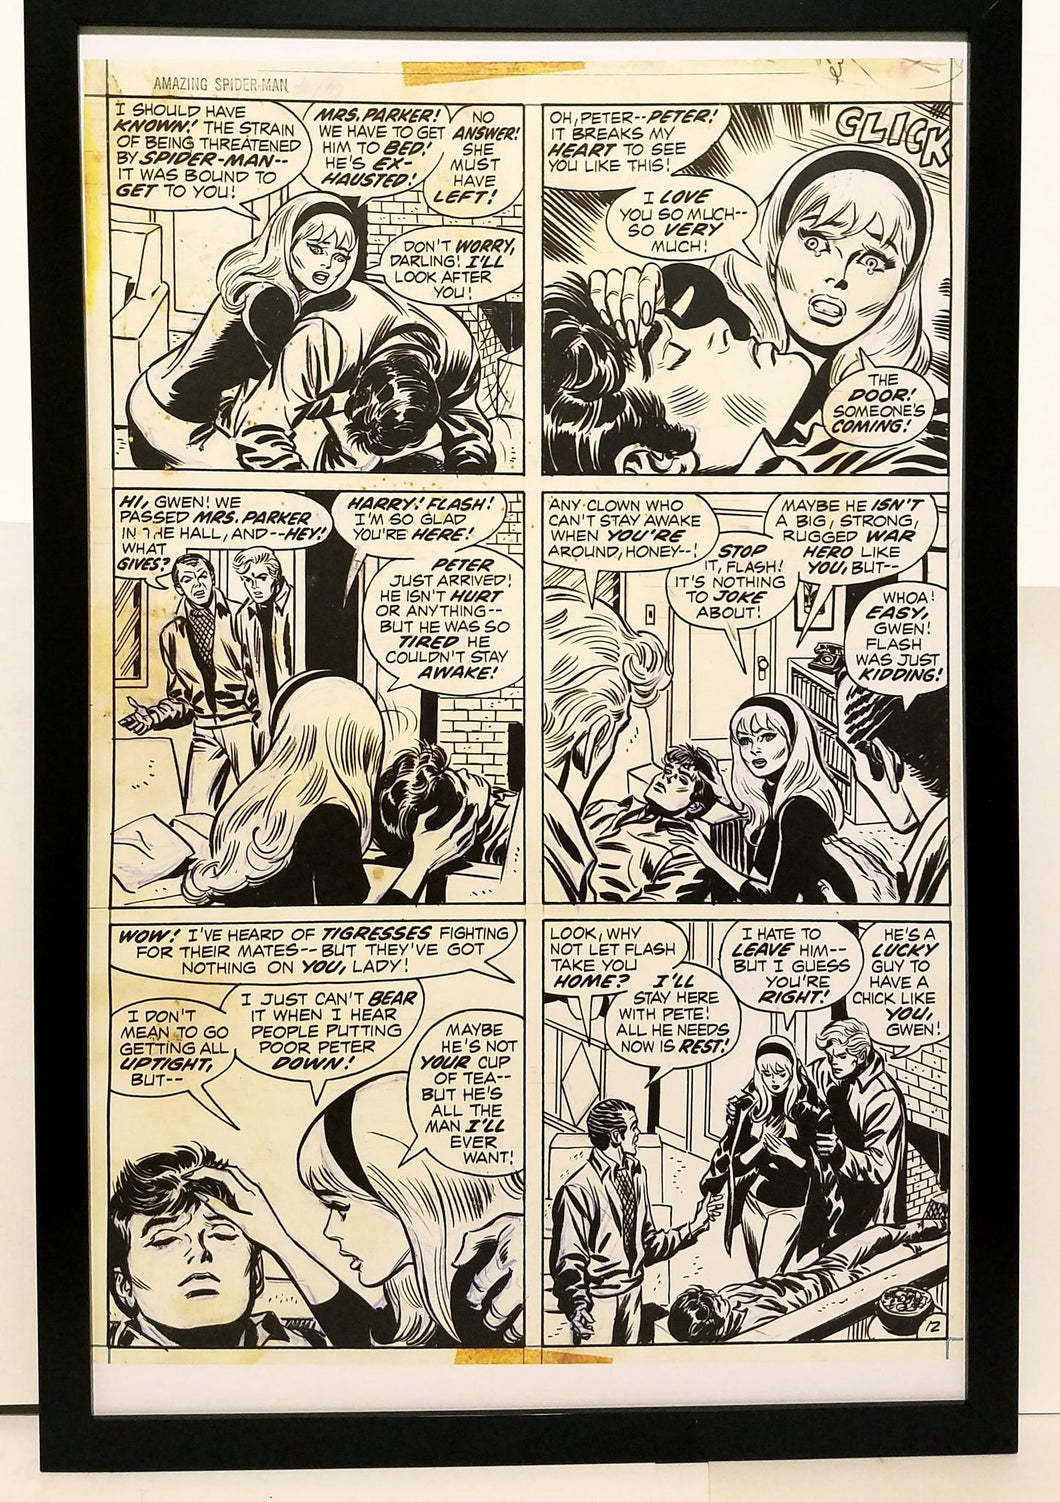 Amazing Spider-Man #110 pg. 12 John Romita 11x17 FRAMED Original Art Poster Marvel Comics